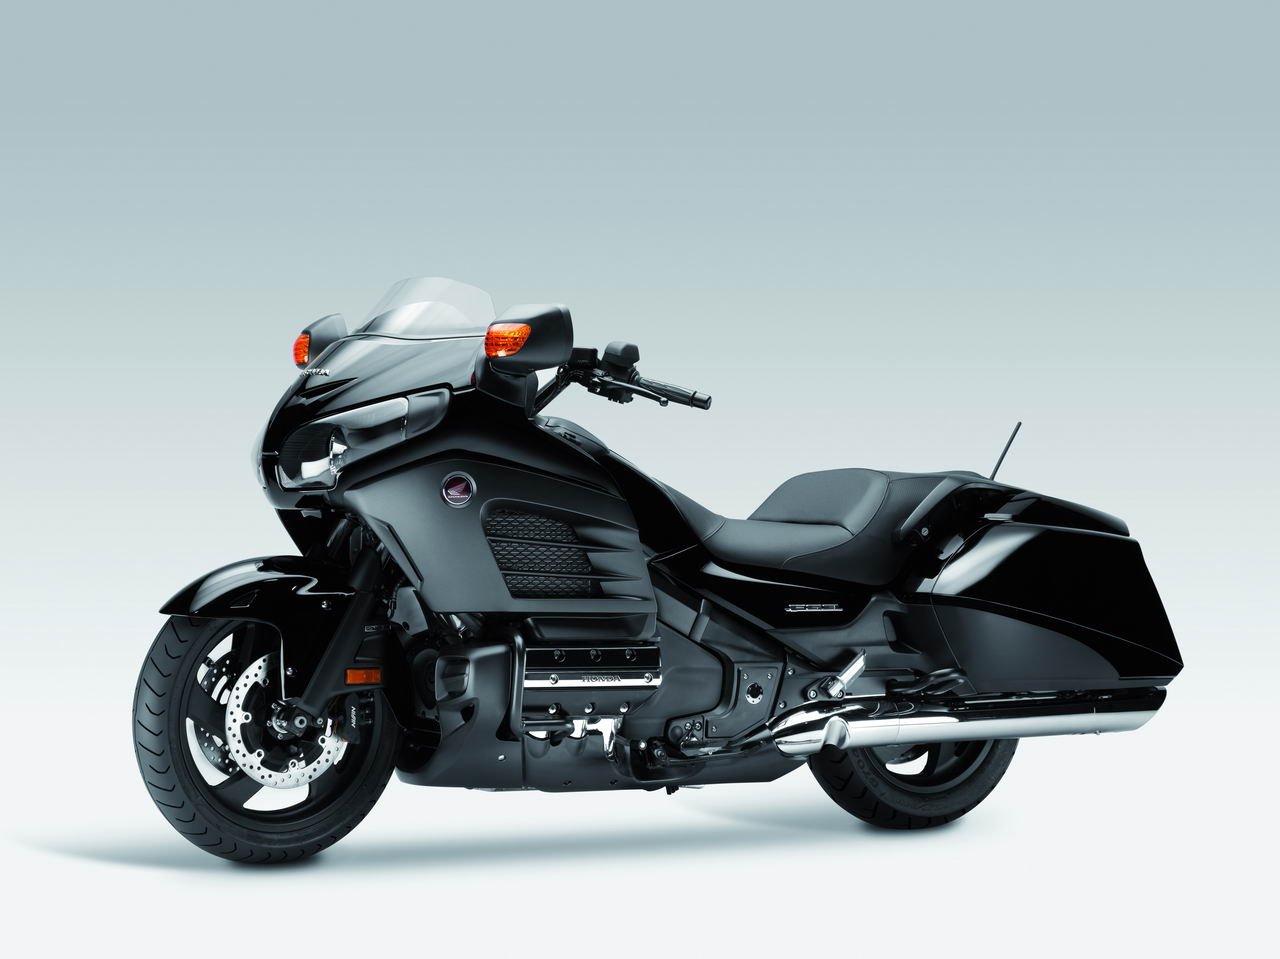 Listino Honda CBF 125 Moto 50 e 125 - image 14687_honda-goldwingf6b-bagger on https://moto.motori.net